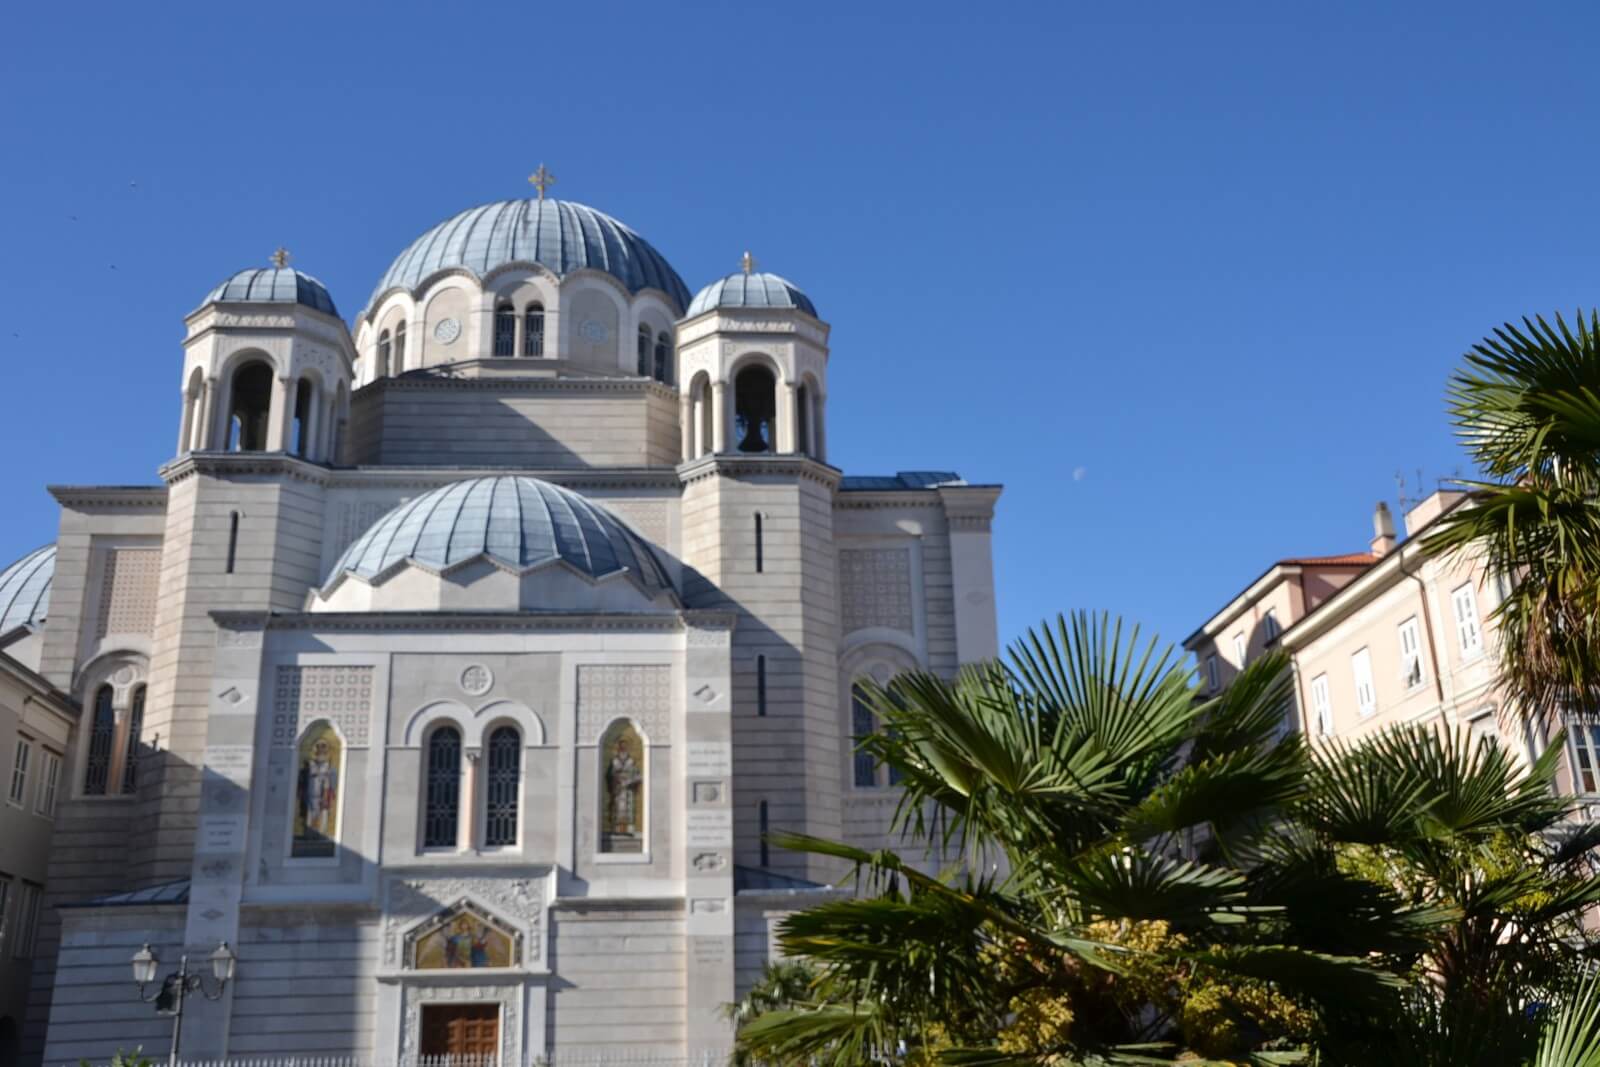 Foto: Orthodoxe Kirche in Triest - Lupe Reisen